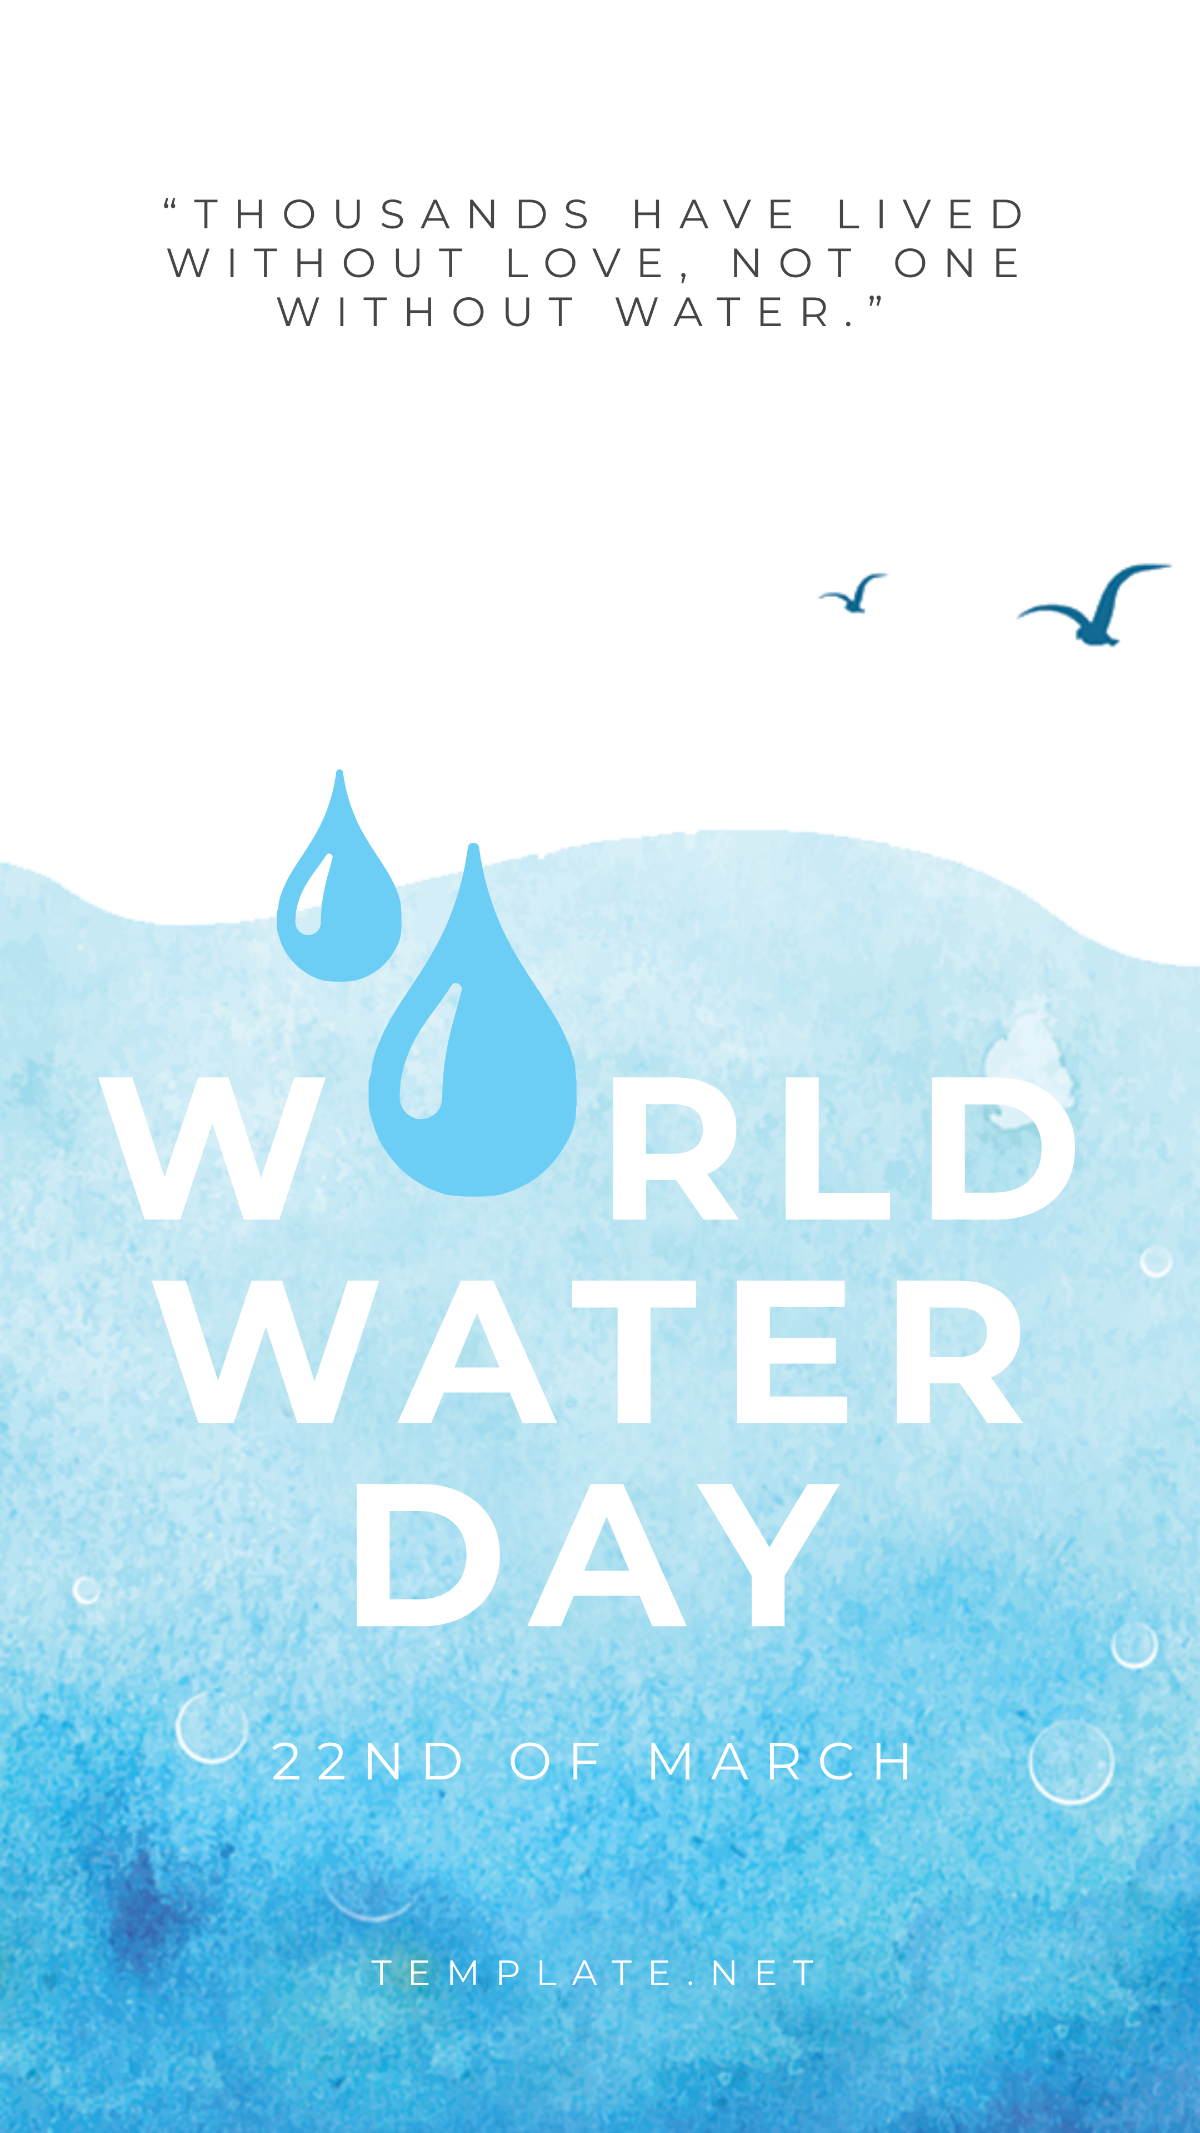 Free World Water Day Whatsapp Image Template